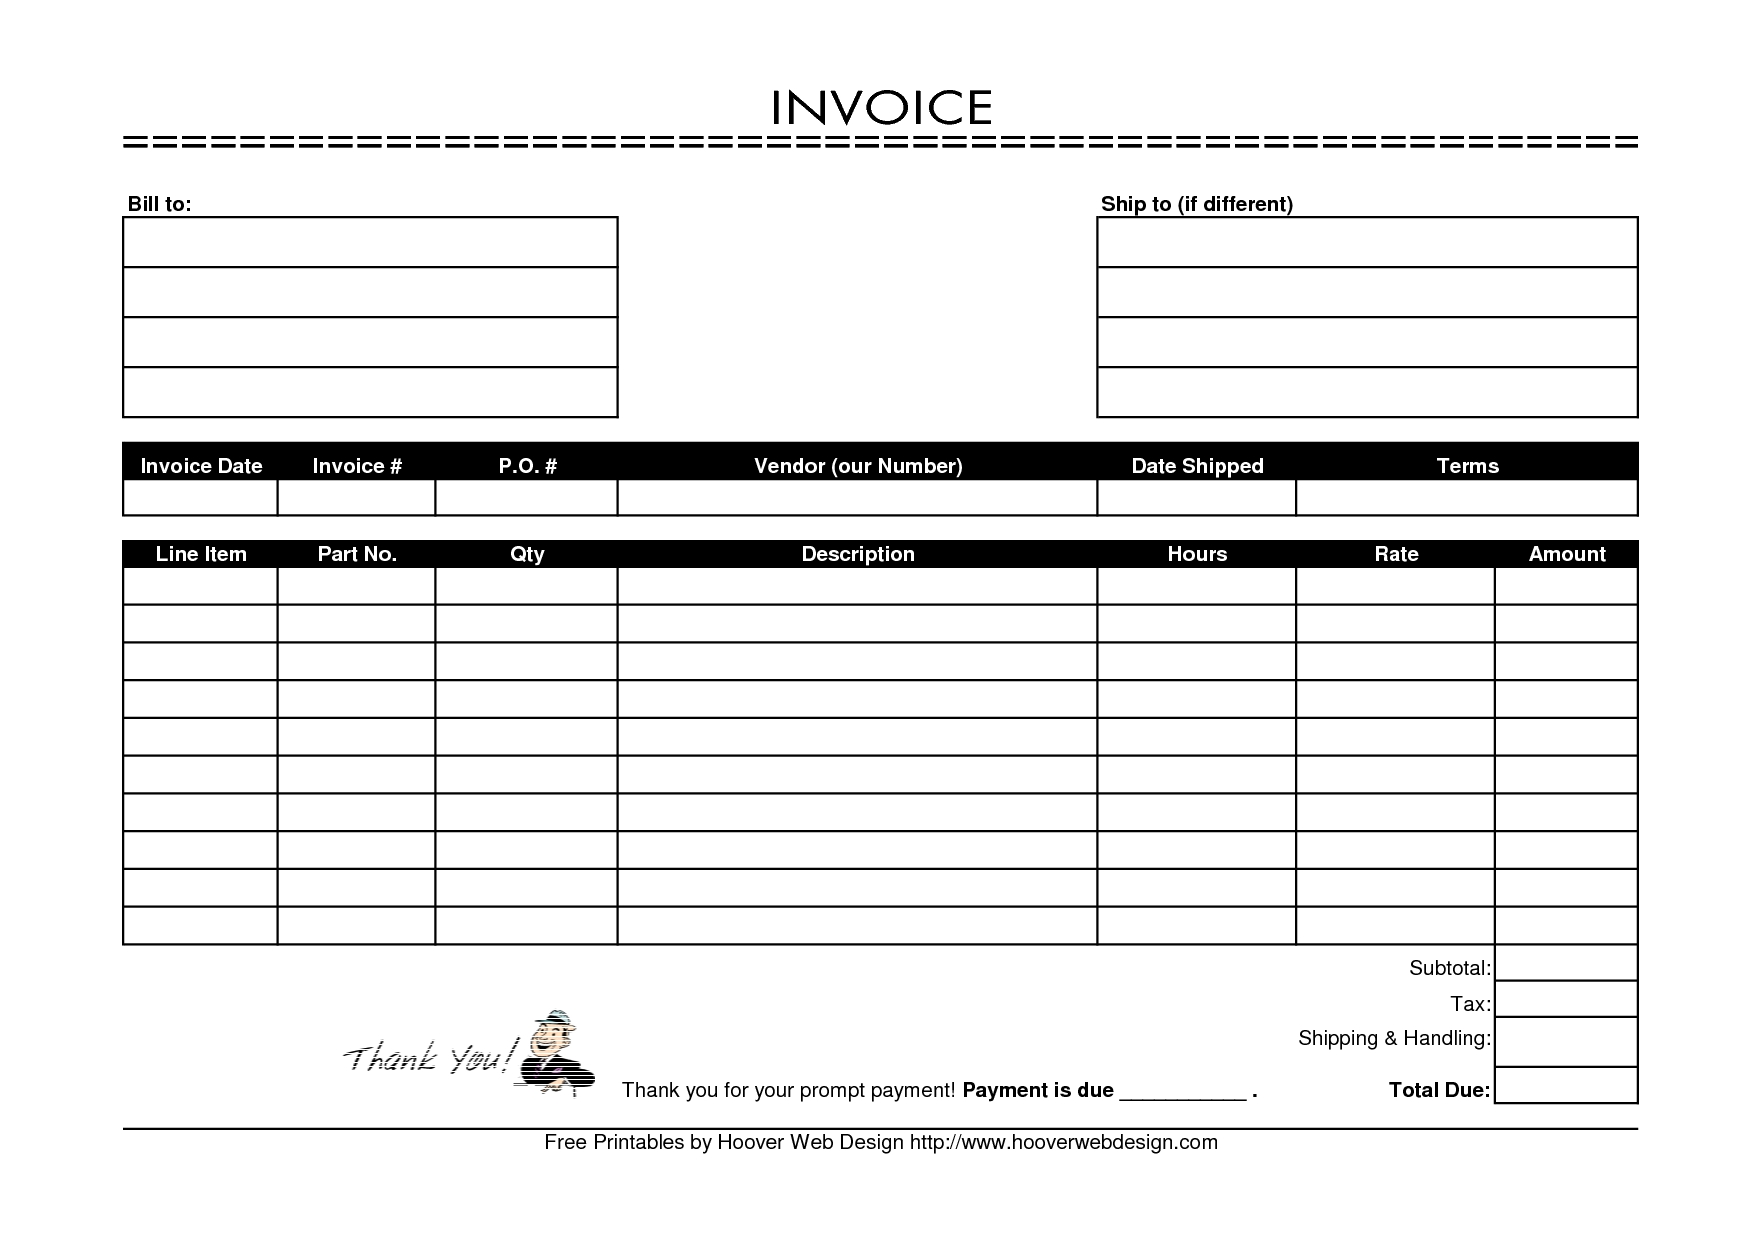 invoice-form-free-printable-invoice-template-ideas